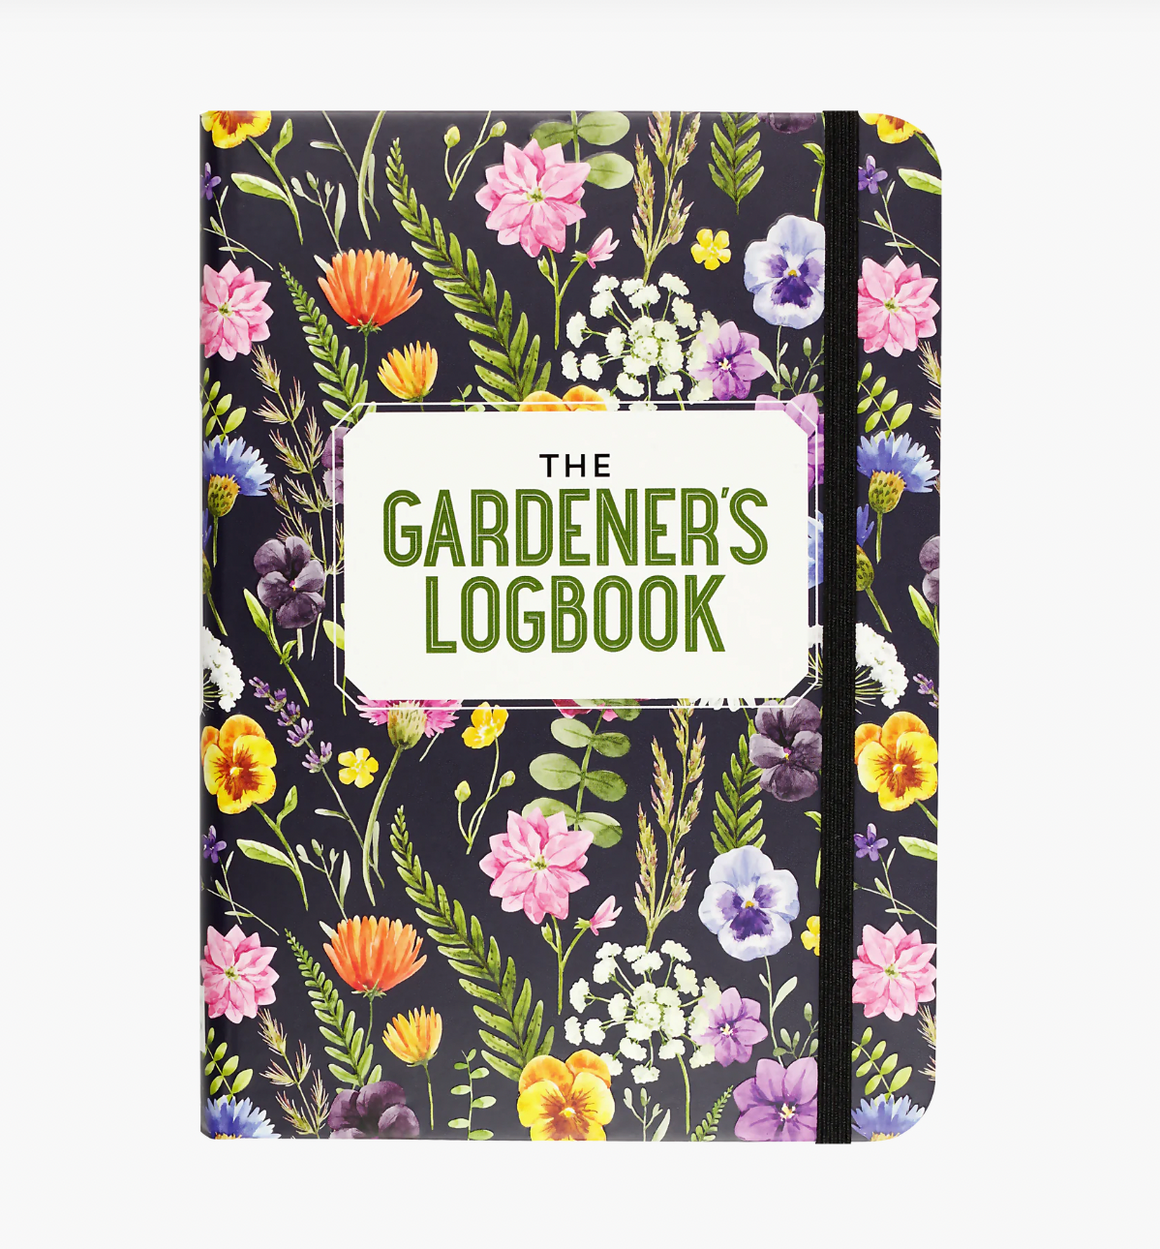 The Gardener's Logbook